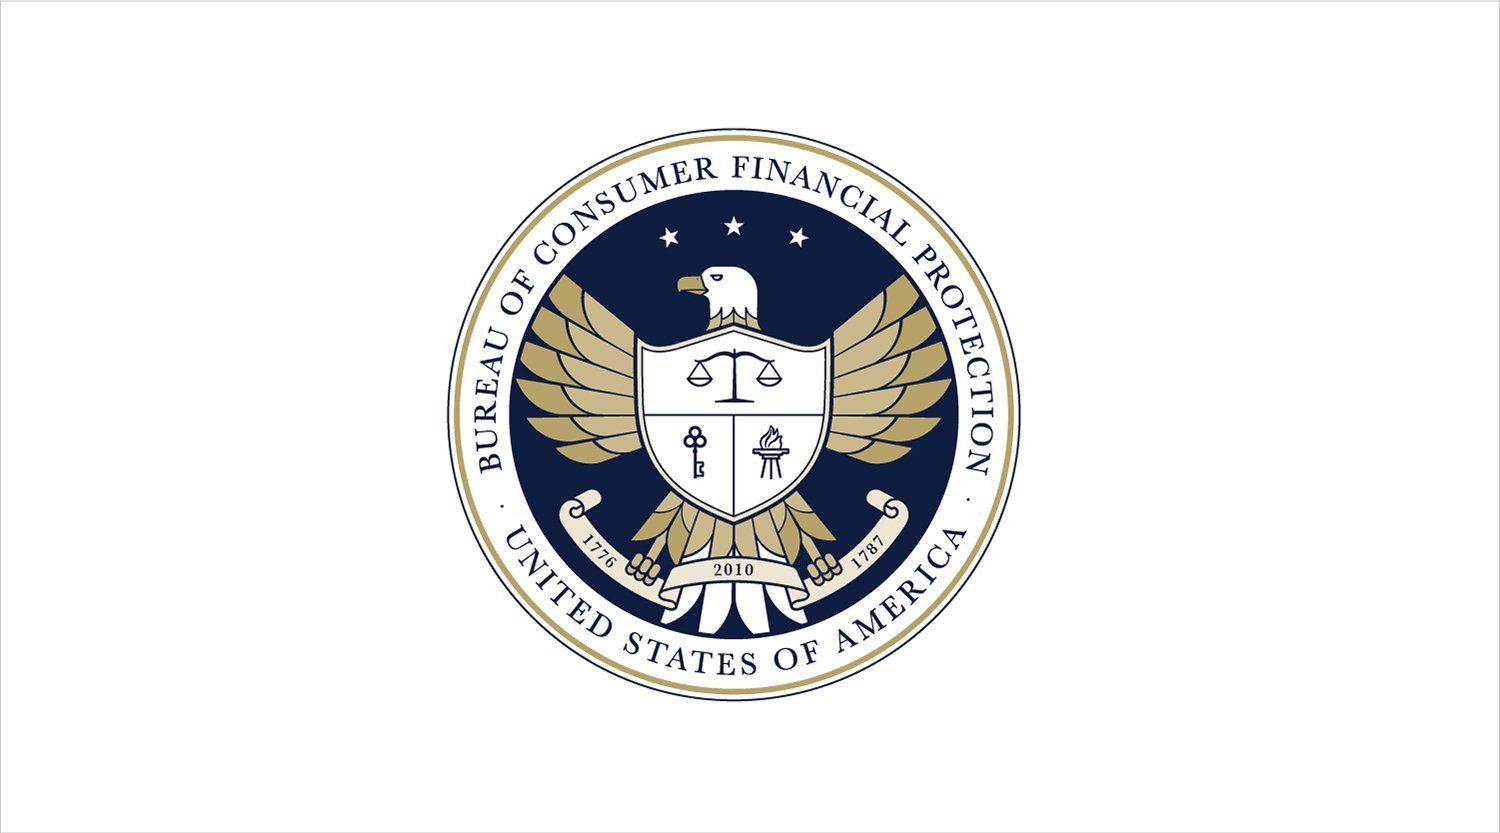 Bureau Logo - Introducing our new Bureau seal | Consumer Financial Protection Bureau